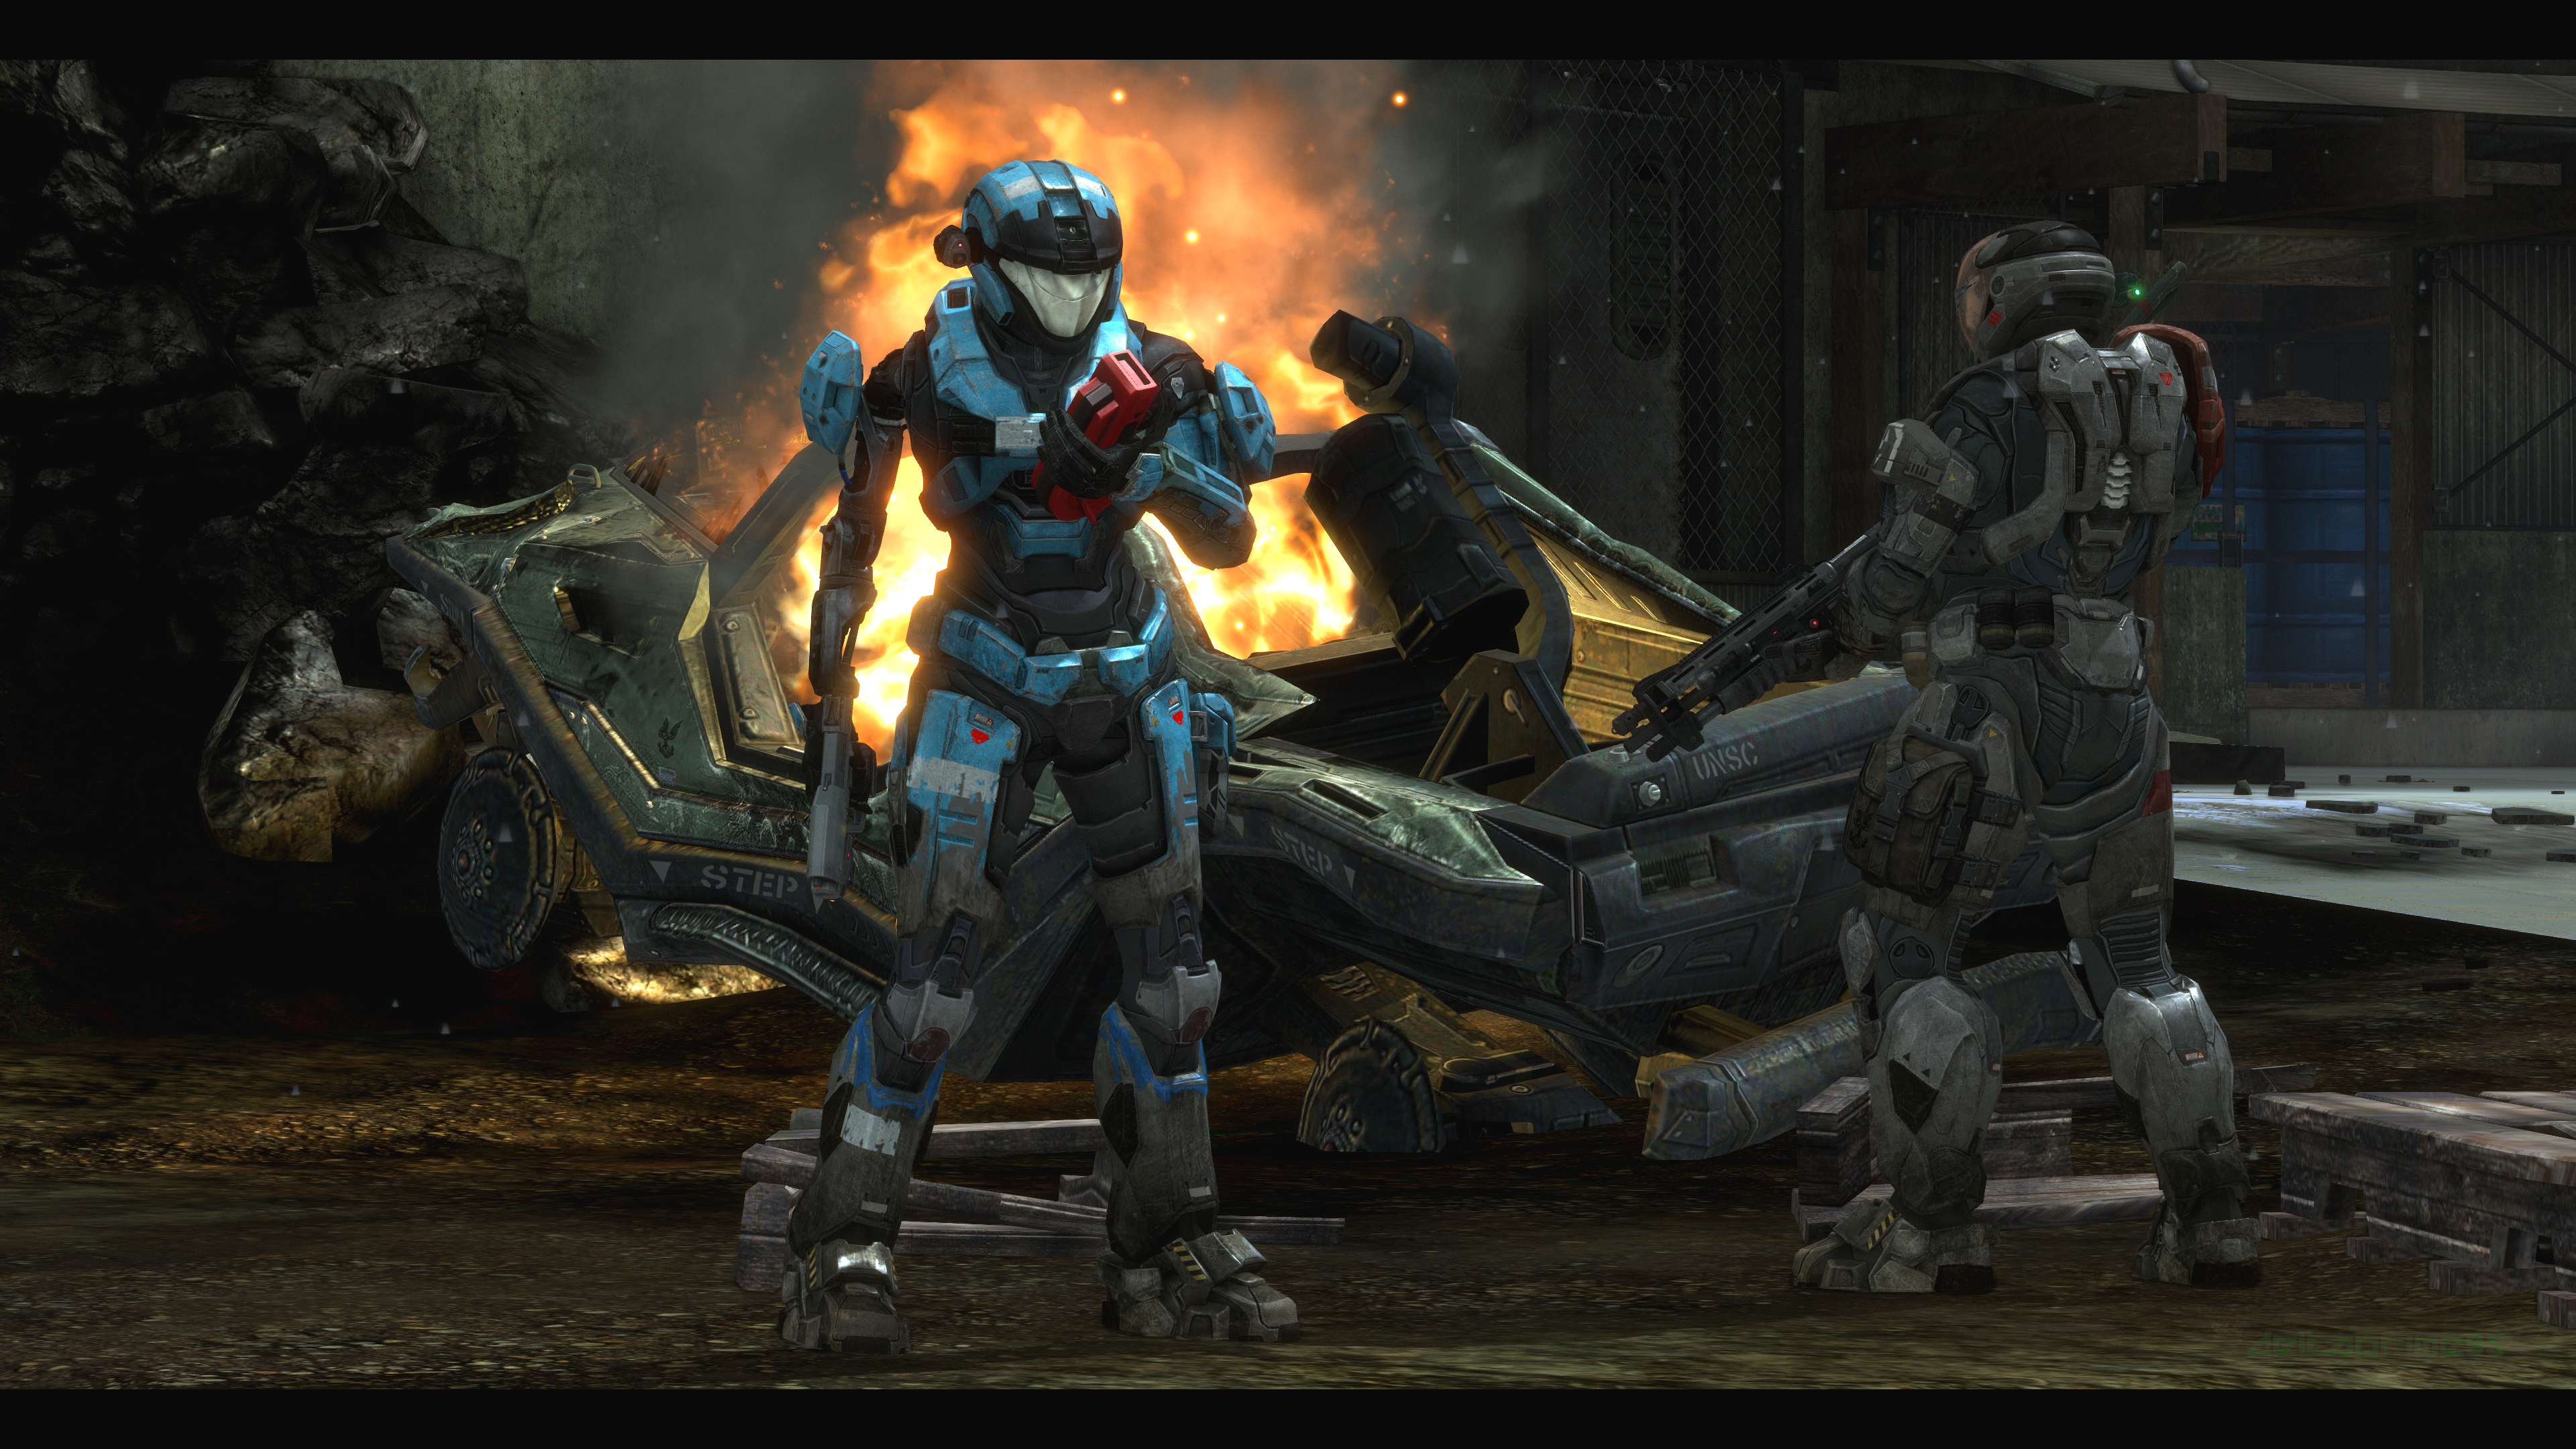 PC Gaming Screen Shot In Game Halo Reach Planet Reach Kat B320 Emile A239 M12 Warthog Fire Spartans  3840x2160